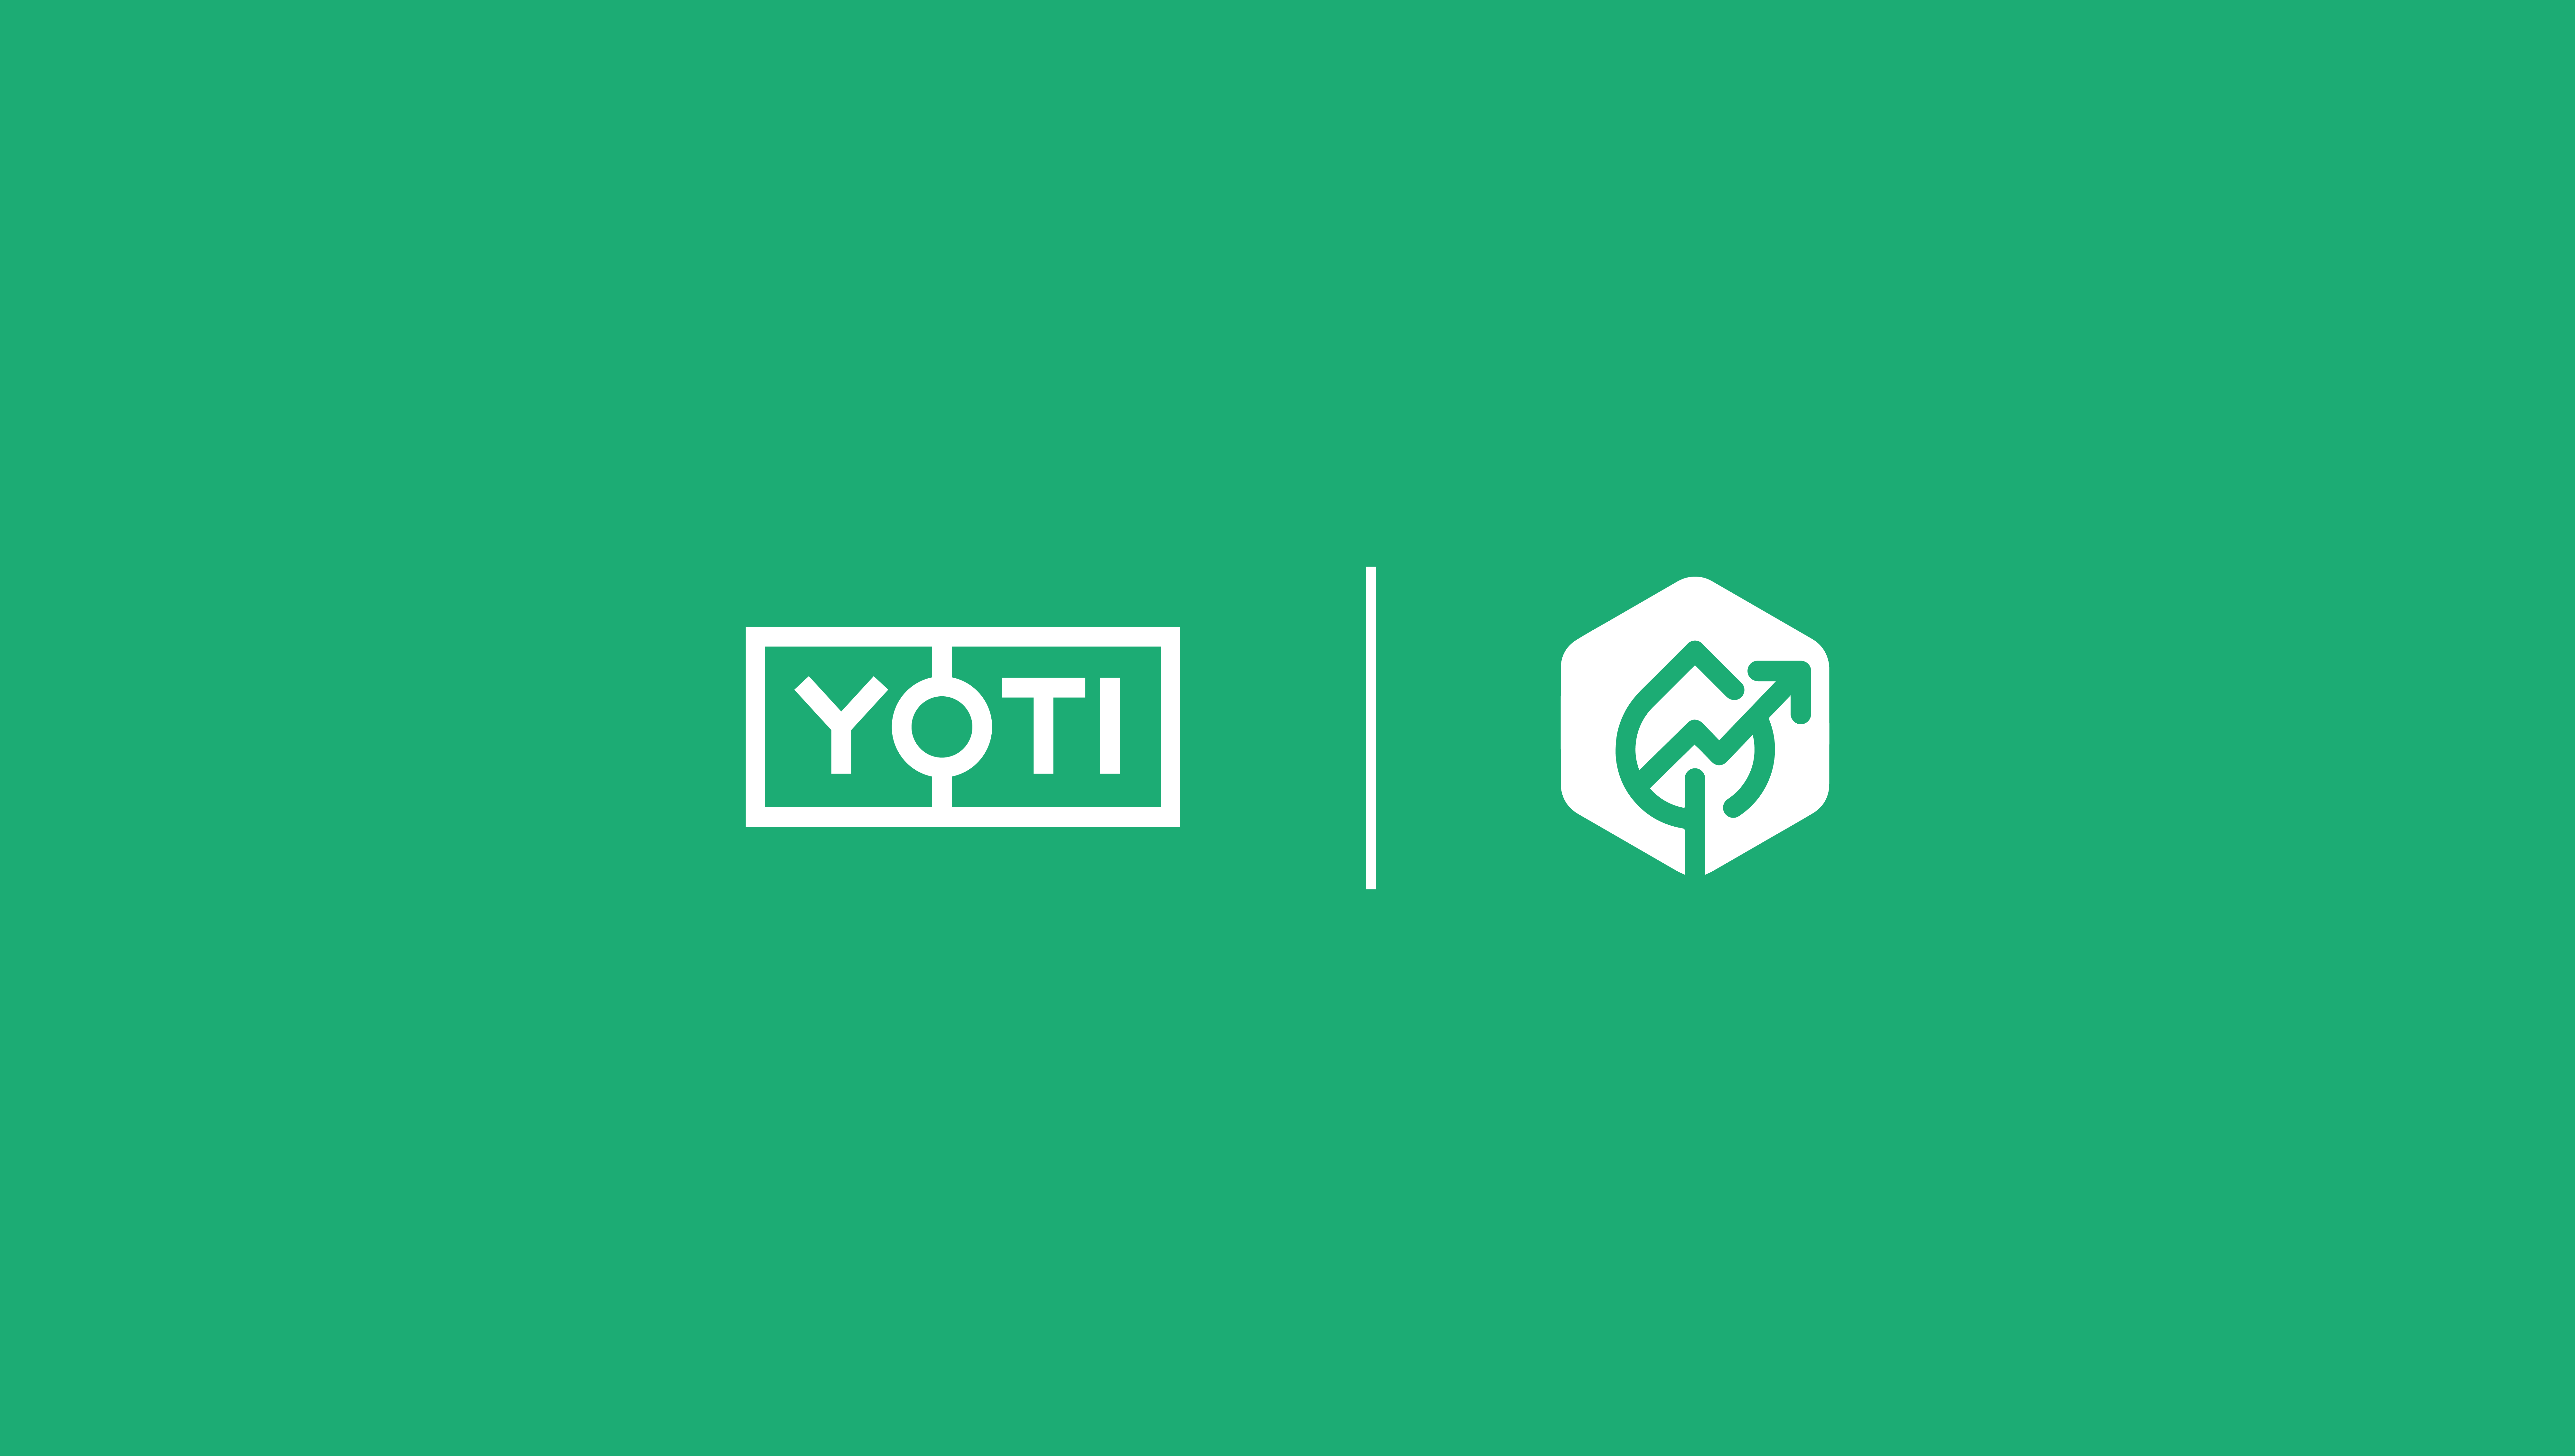 Yoti and GreenGrowth logos presented together